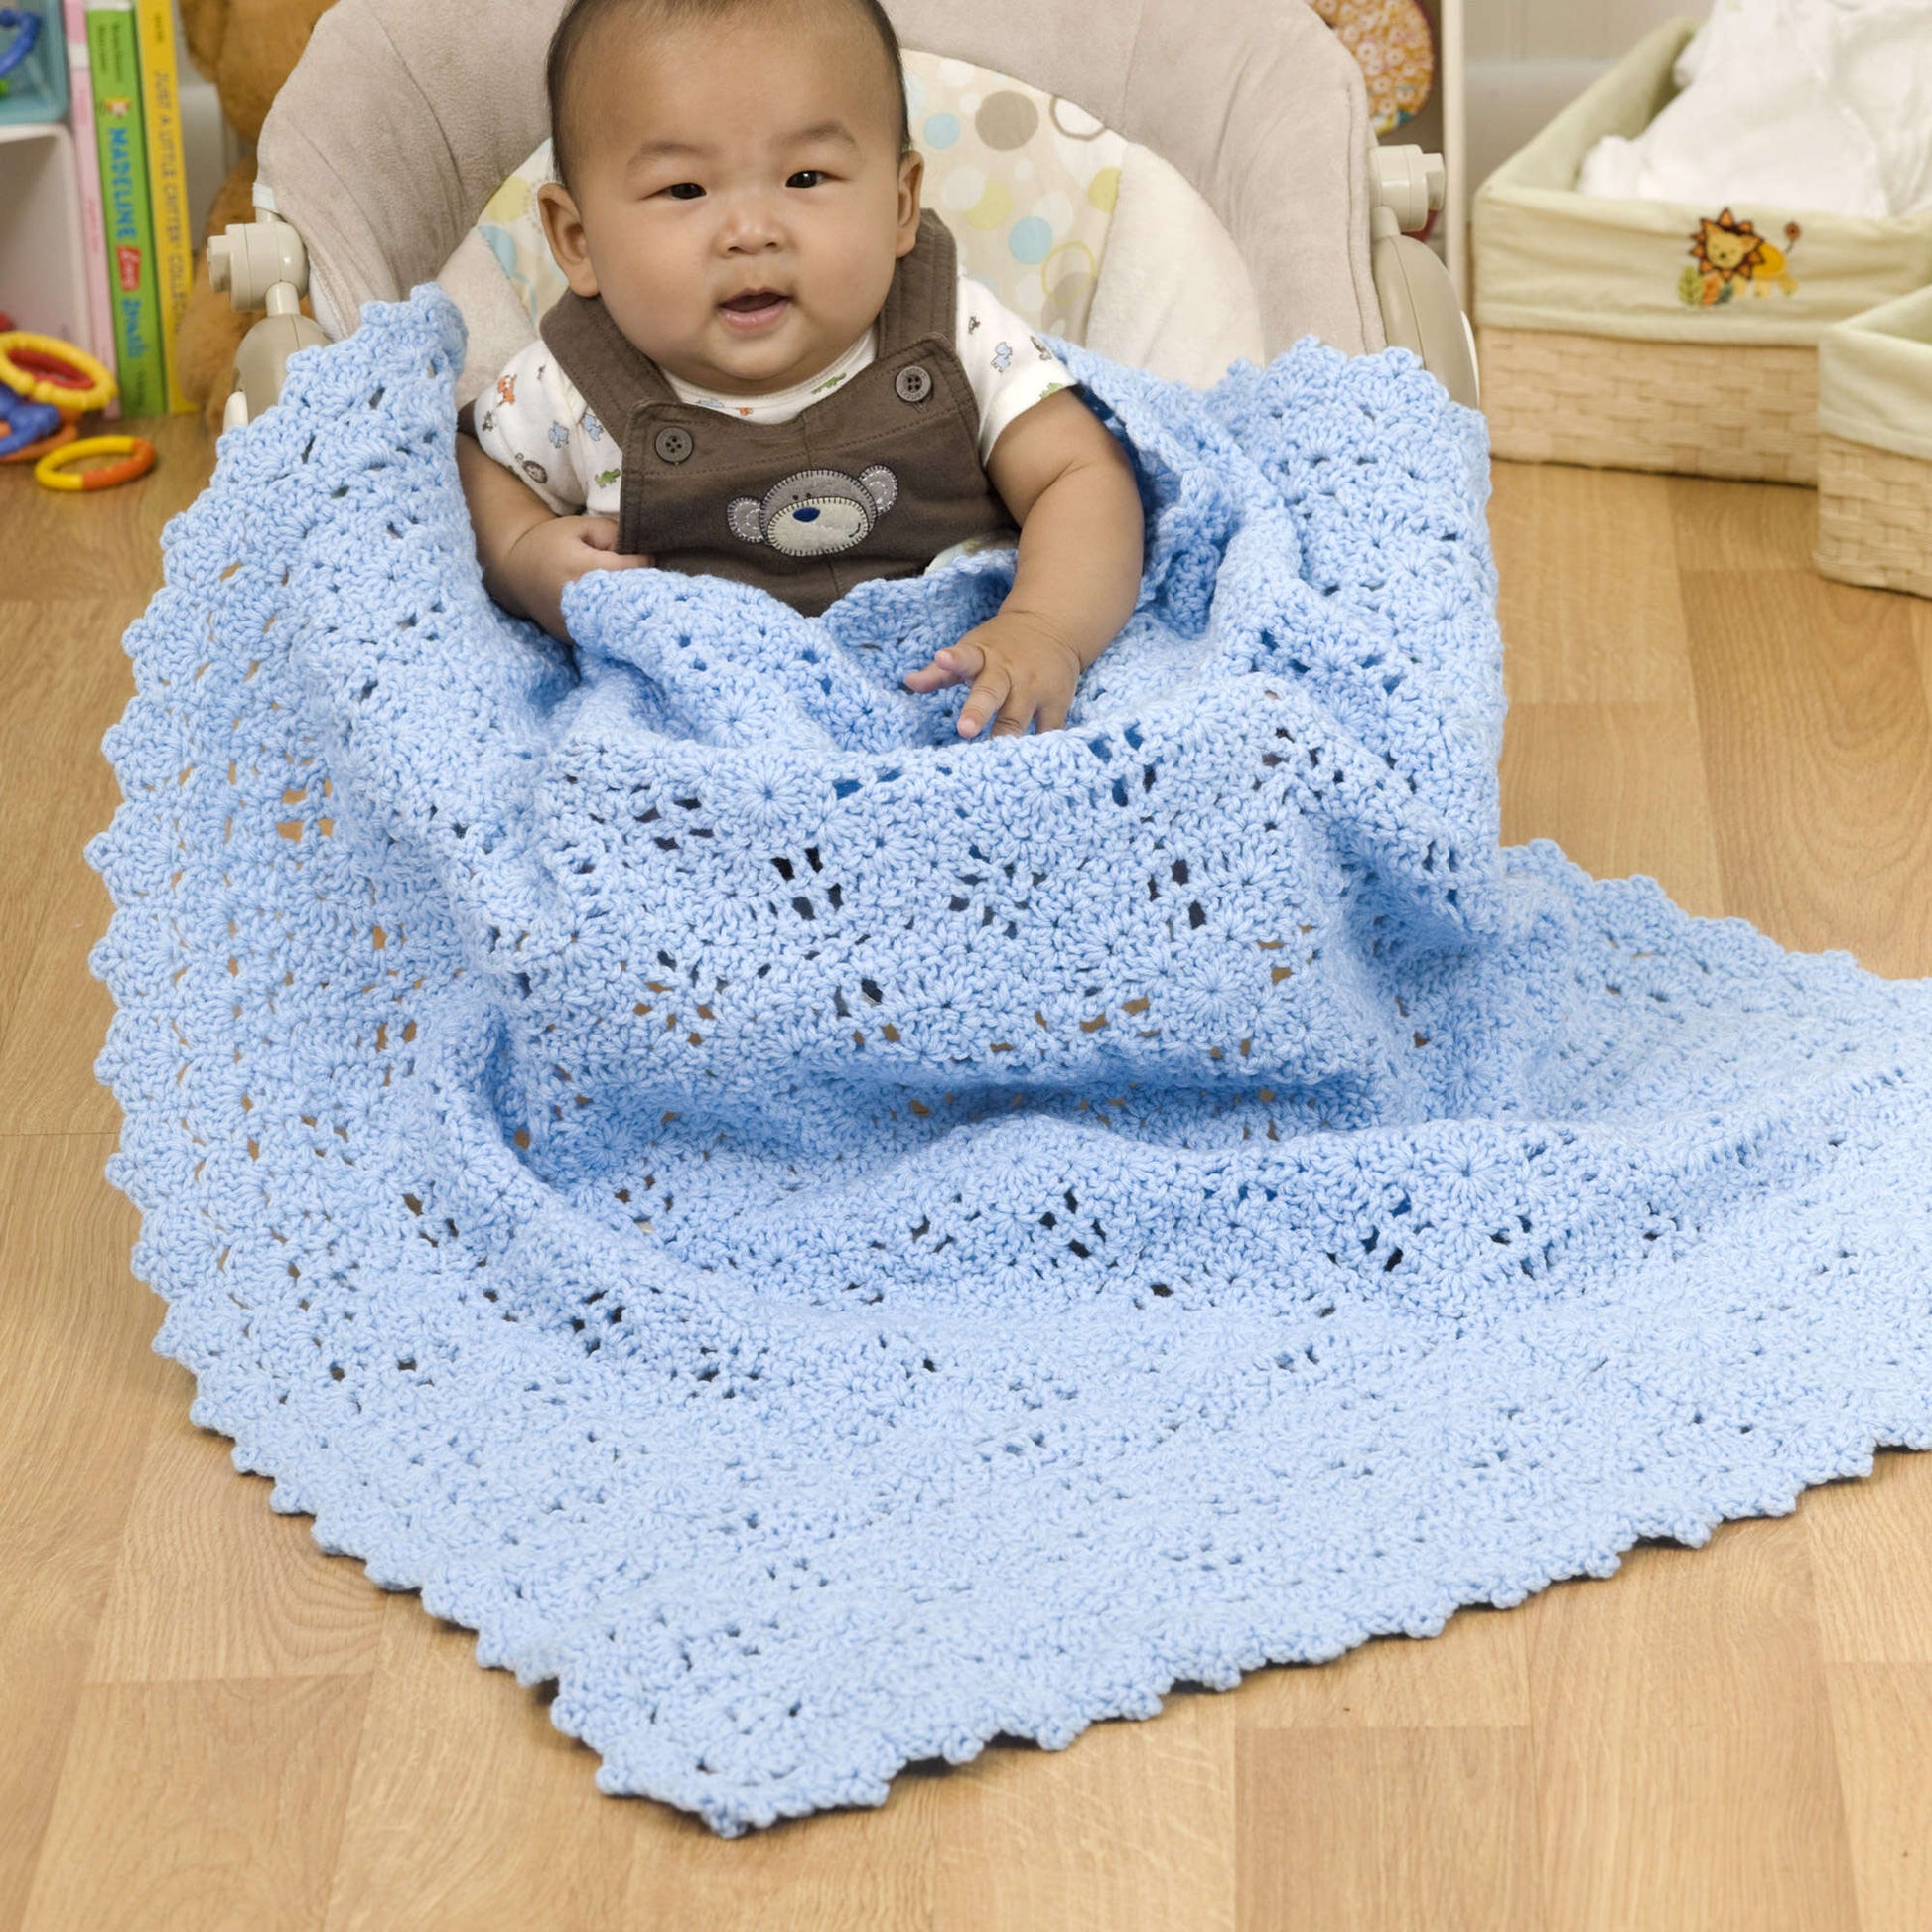 Free Red Heart Building Blocks Crochet Baby Blanket Pattern